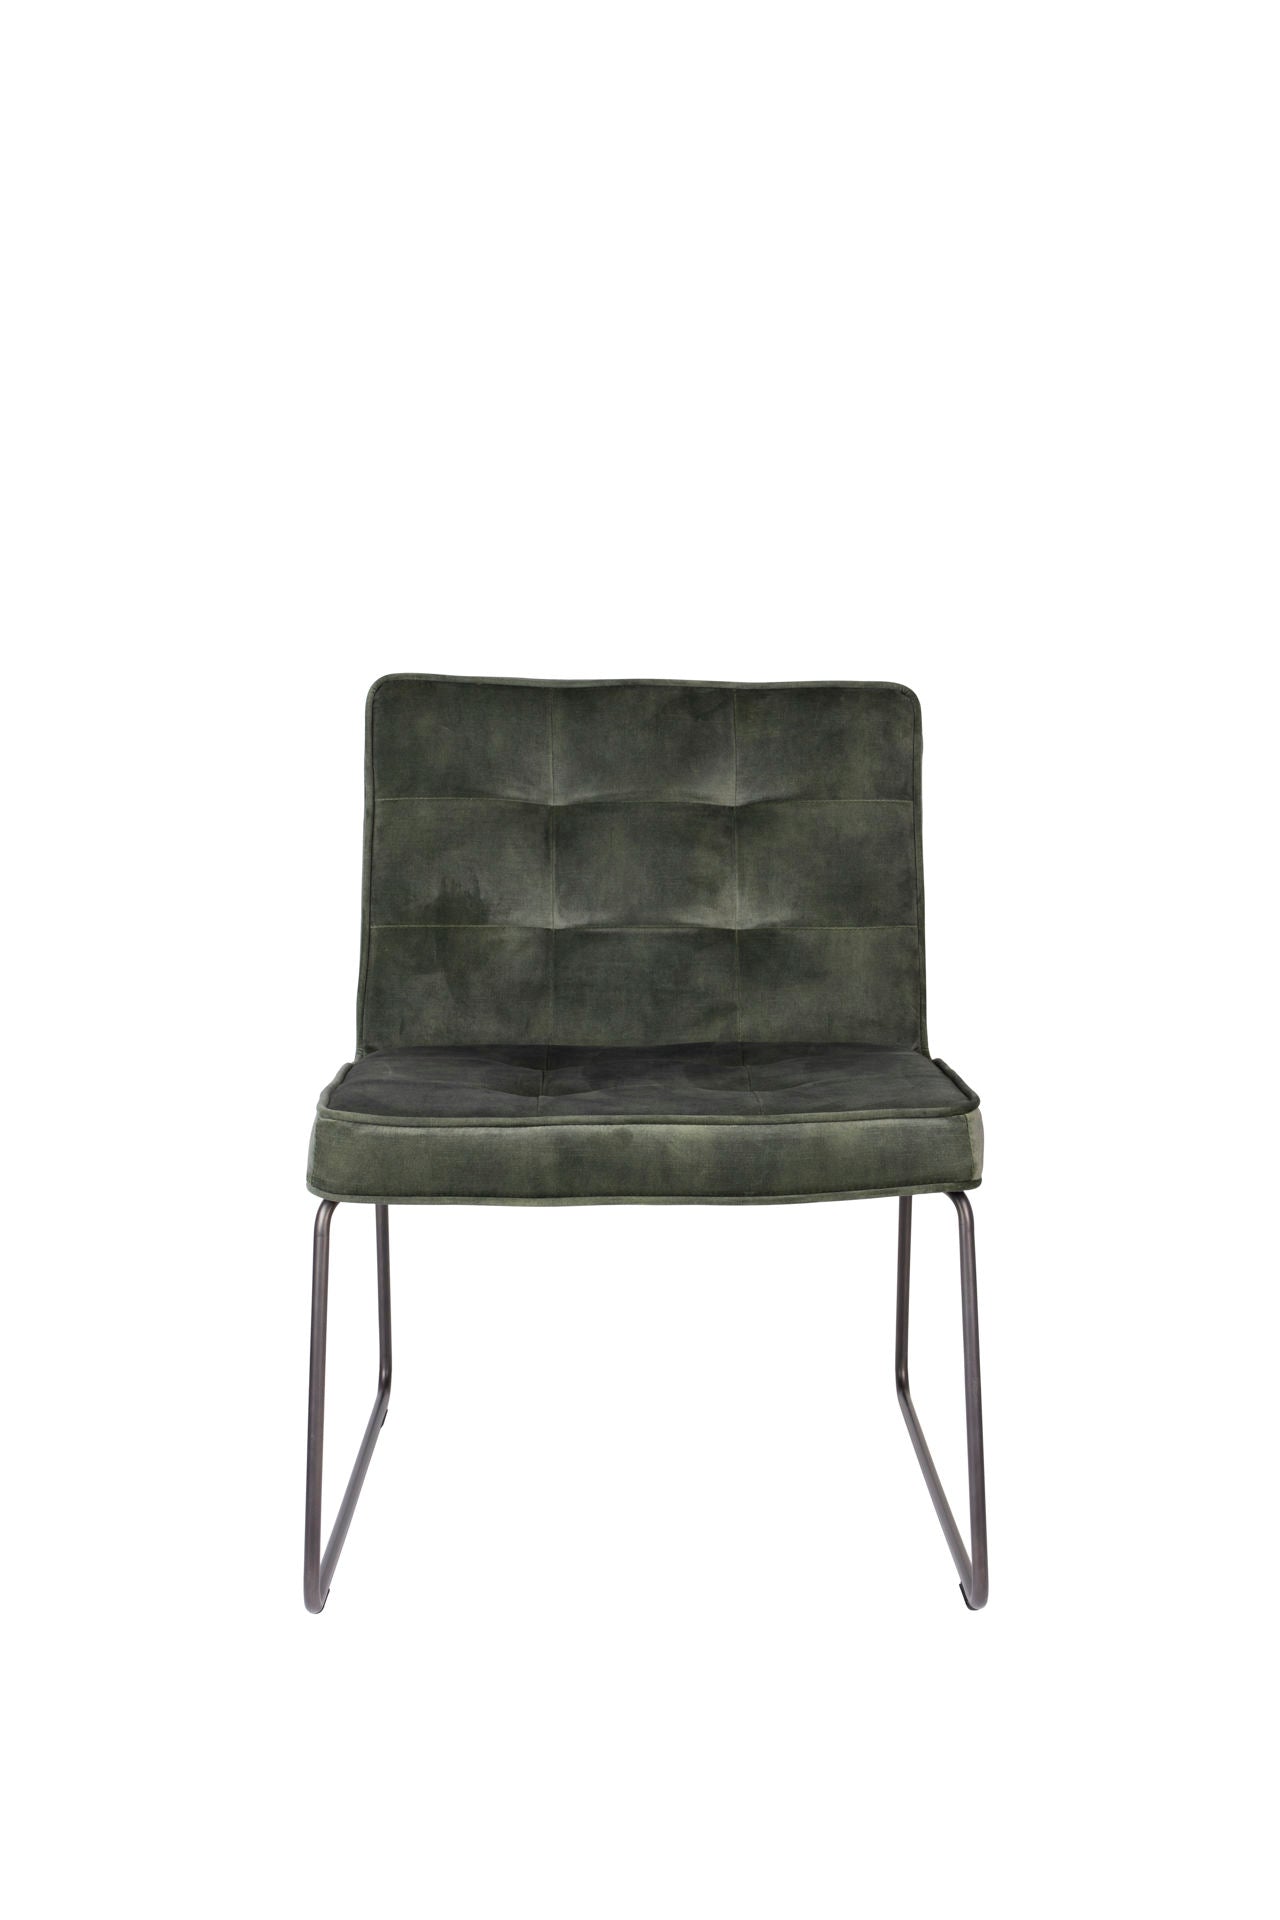 Nancy's Gold Canyon Lounge Chair - Industrieel - Grijs, Groen - Polyester, Multiplex, Metaal - 69 cm x 55,5 cm x 75 cm